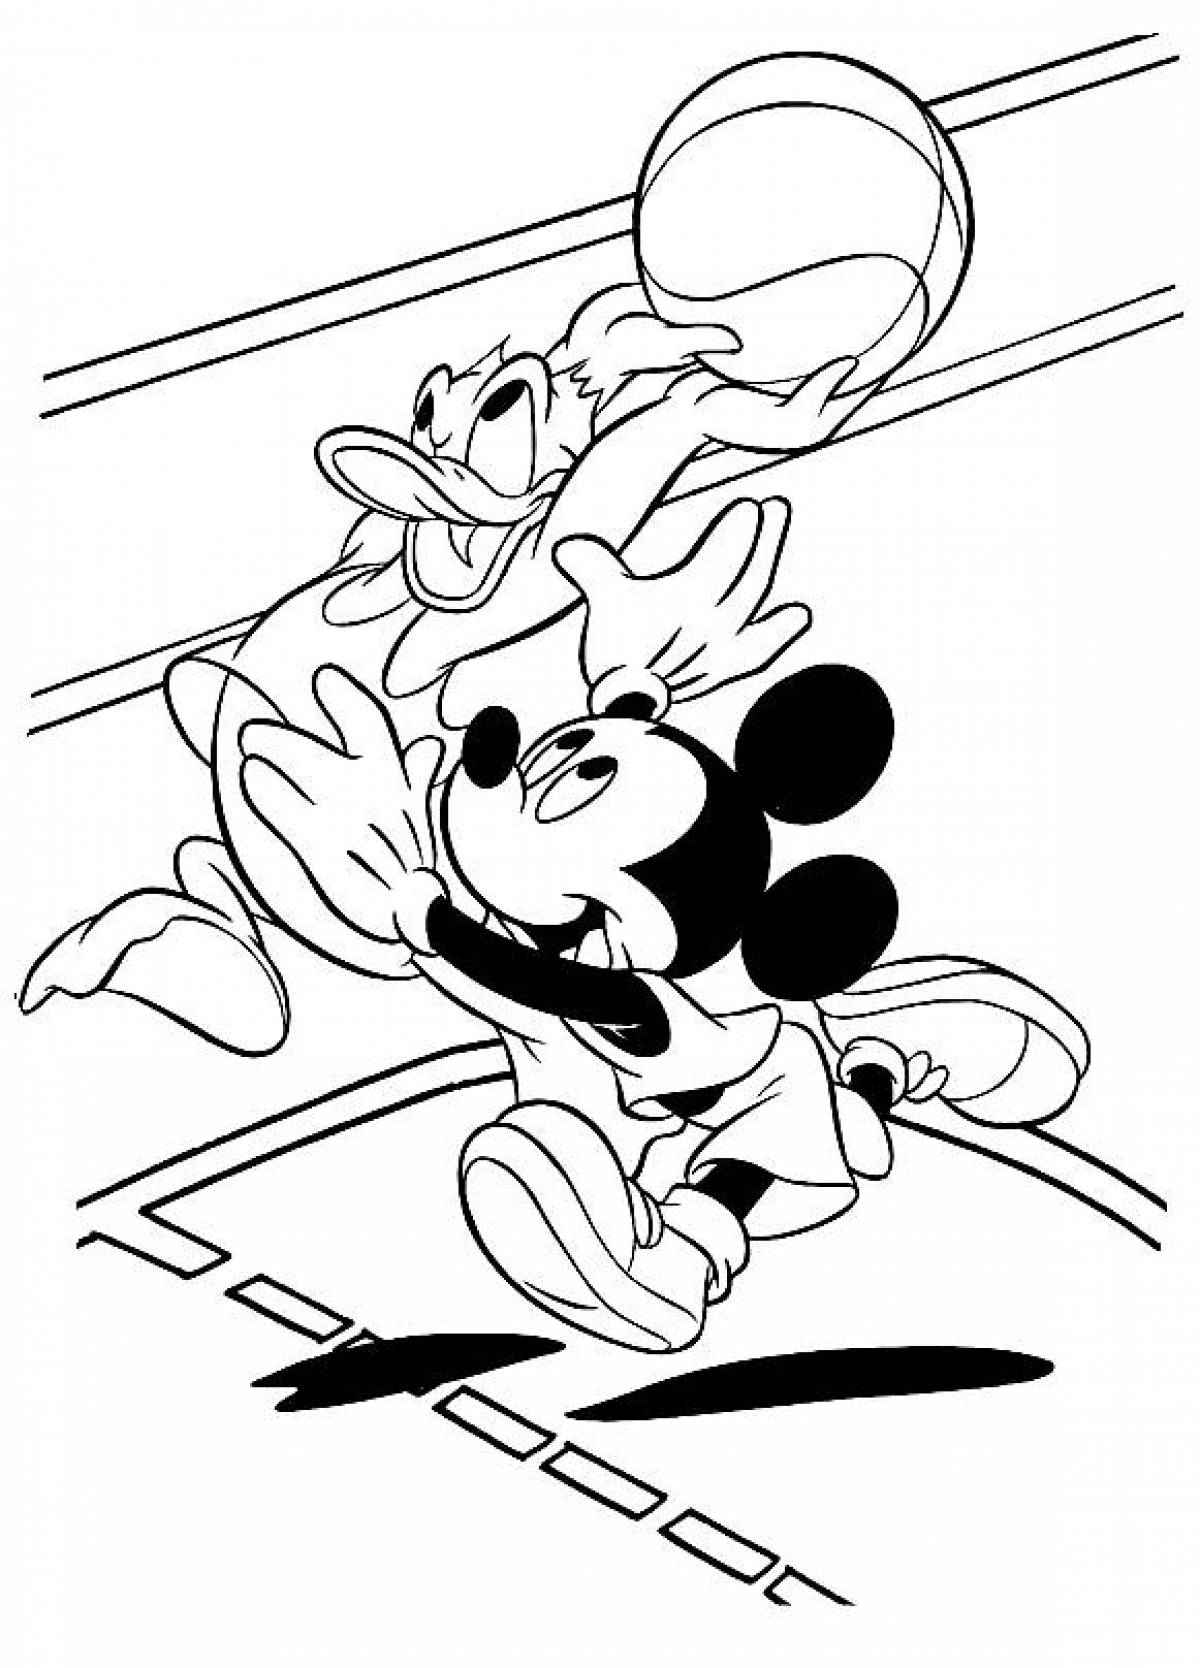 Mickey and Donald play basketball